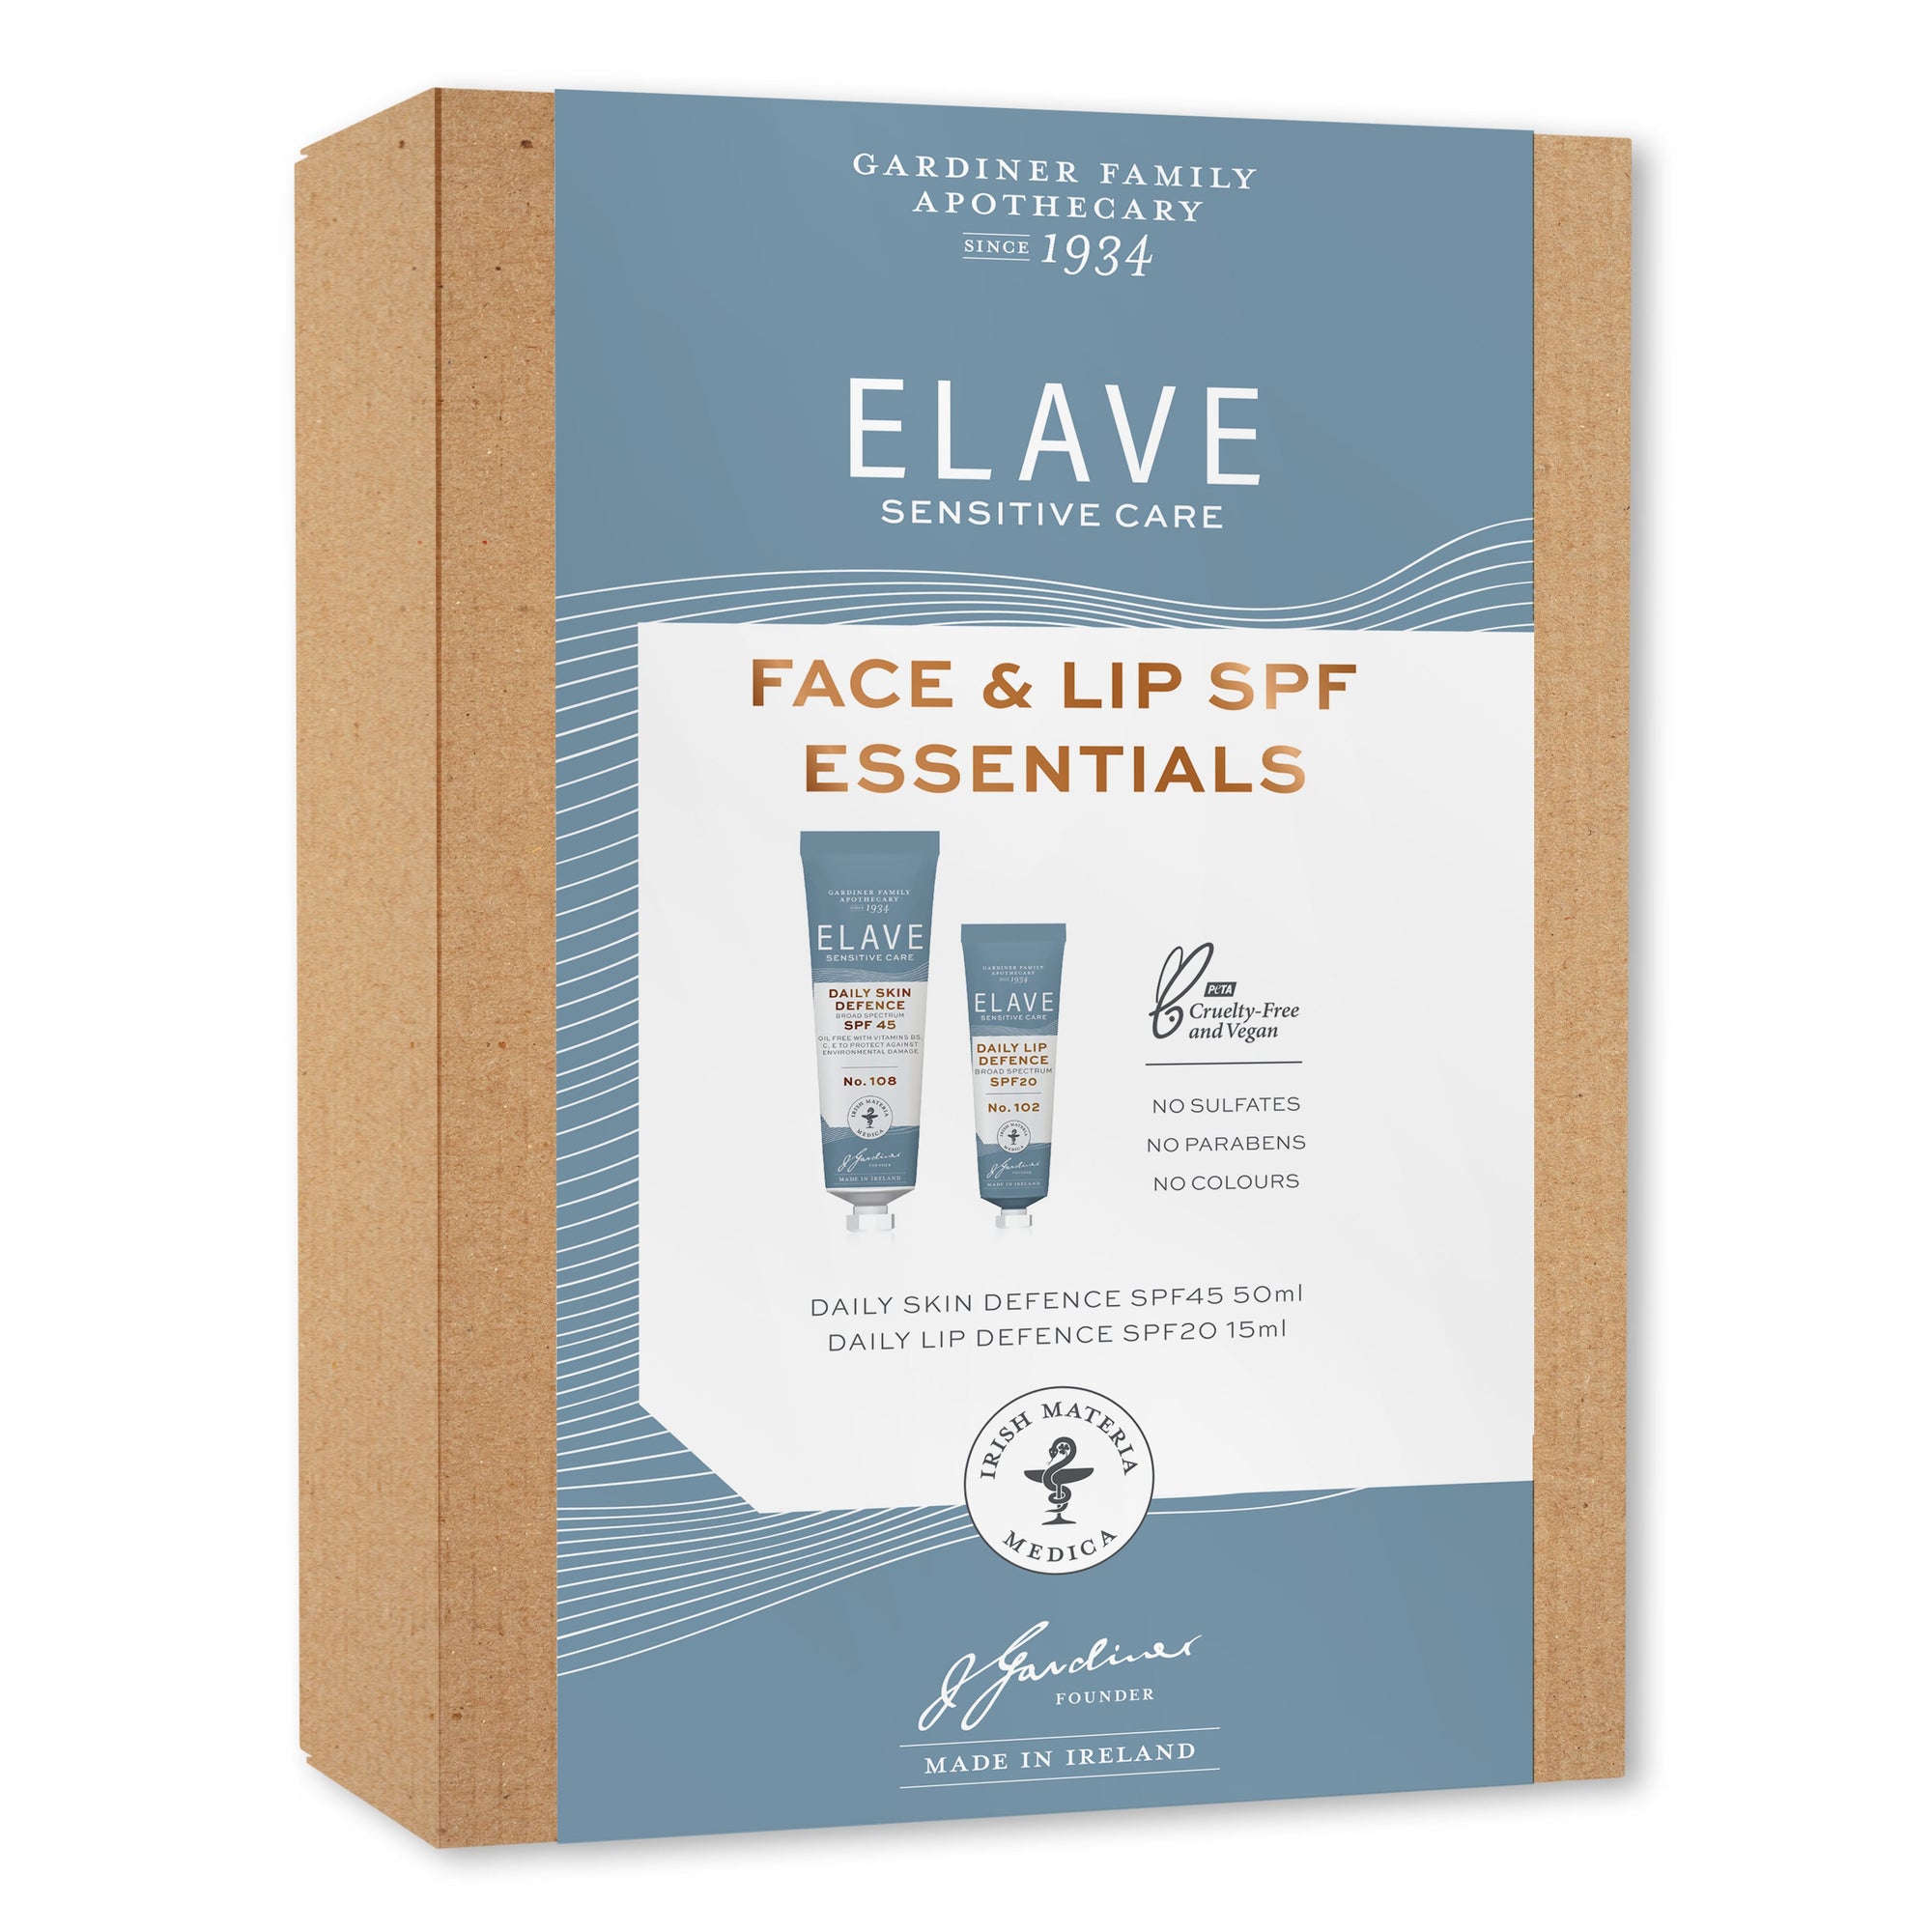 Elave敏感面部及嘴唇防曬套裝 / Elave Face & Lip SPF Essentials